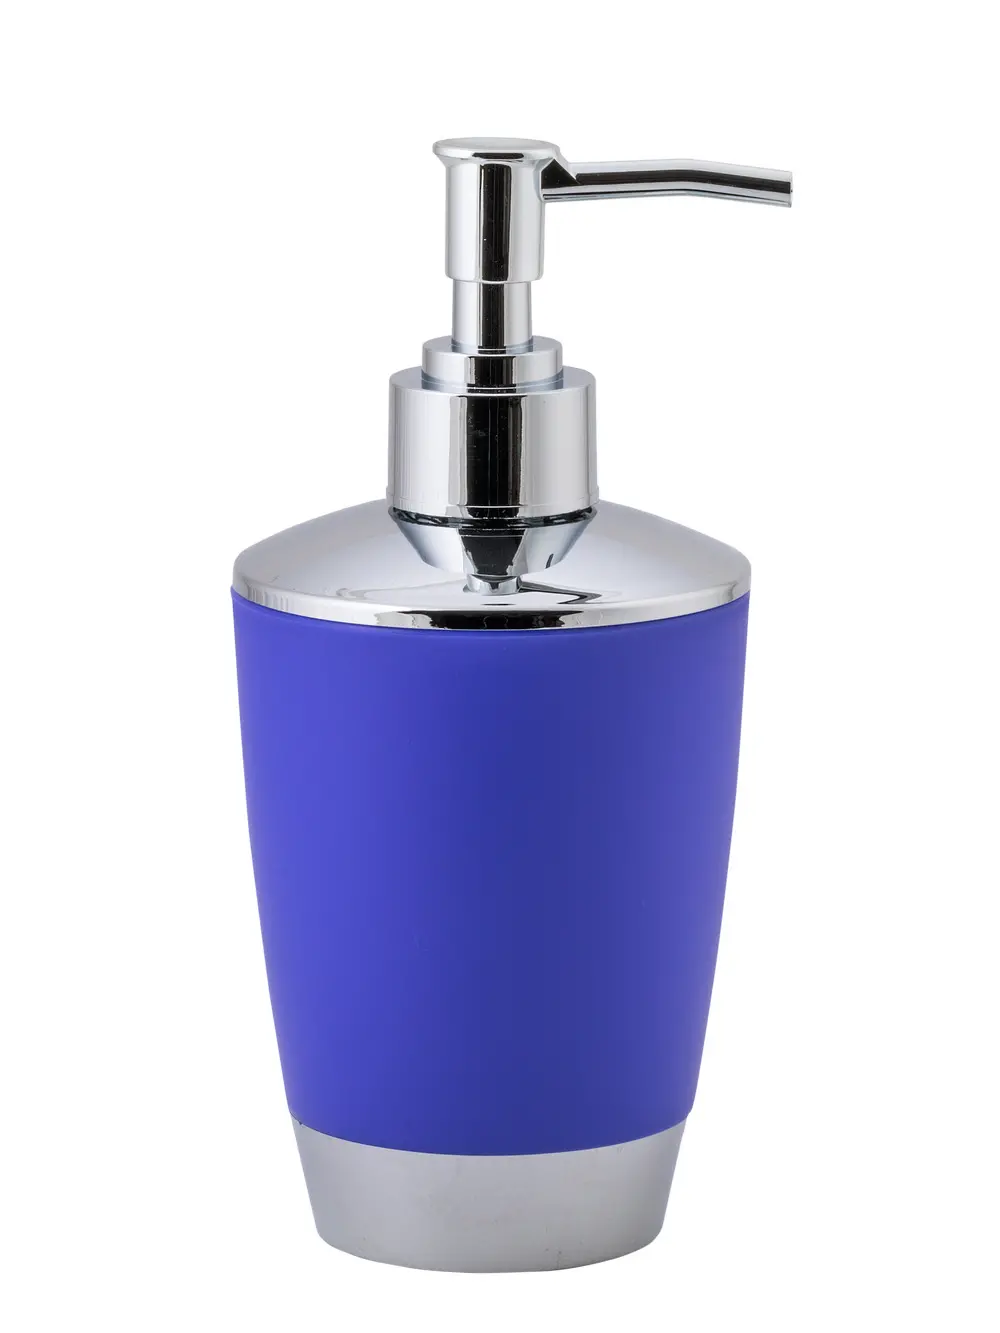 Дозатор для жидкого мыла Альма синий, пластик SWP-2100BL-01